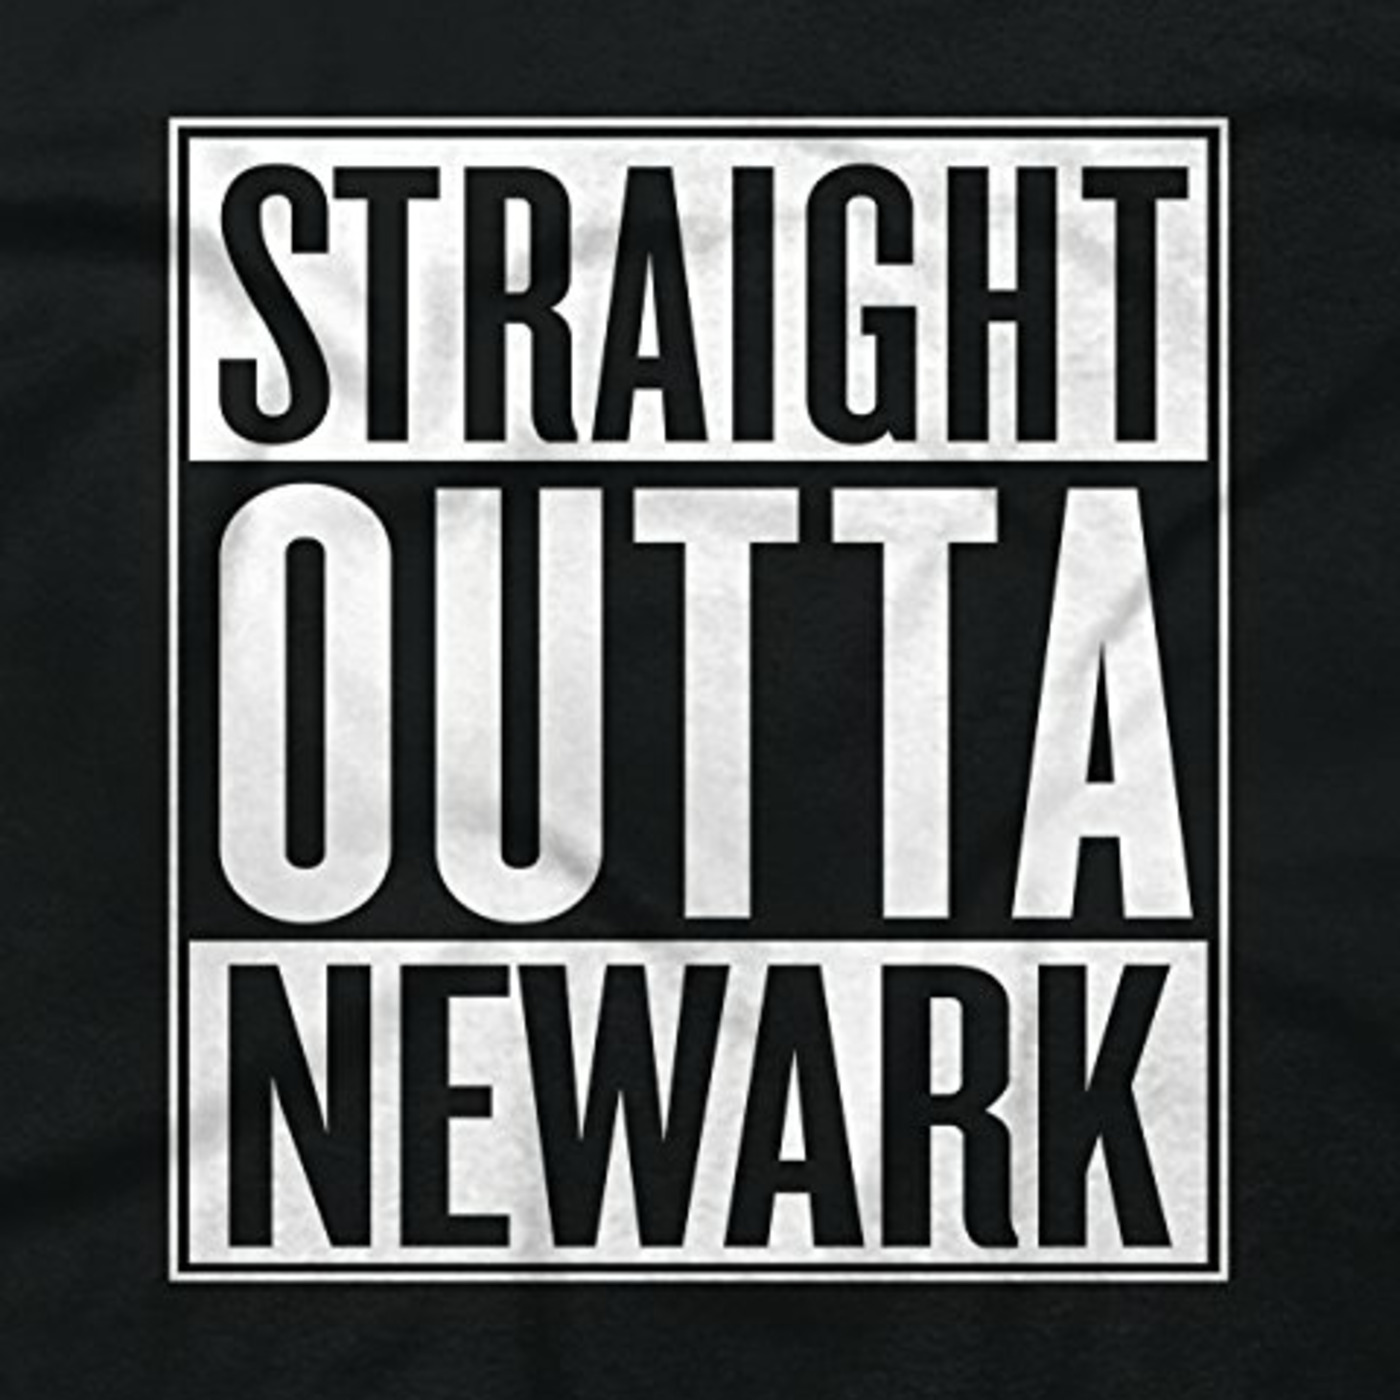 Experiencing Newark